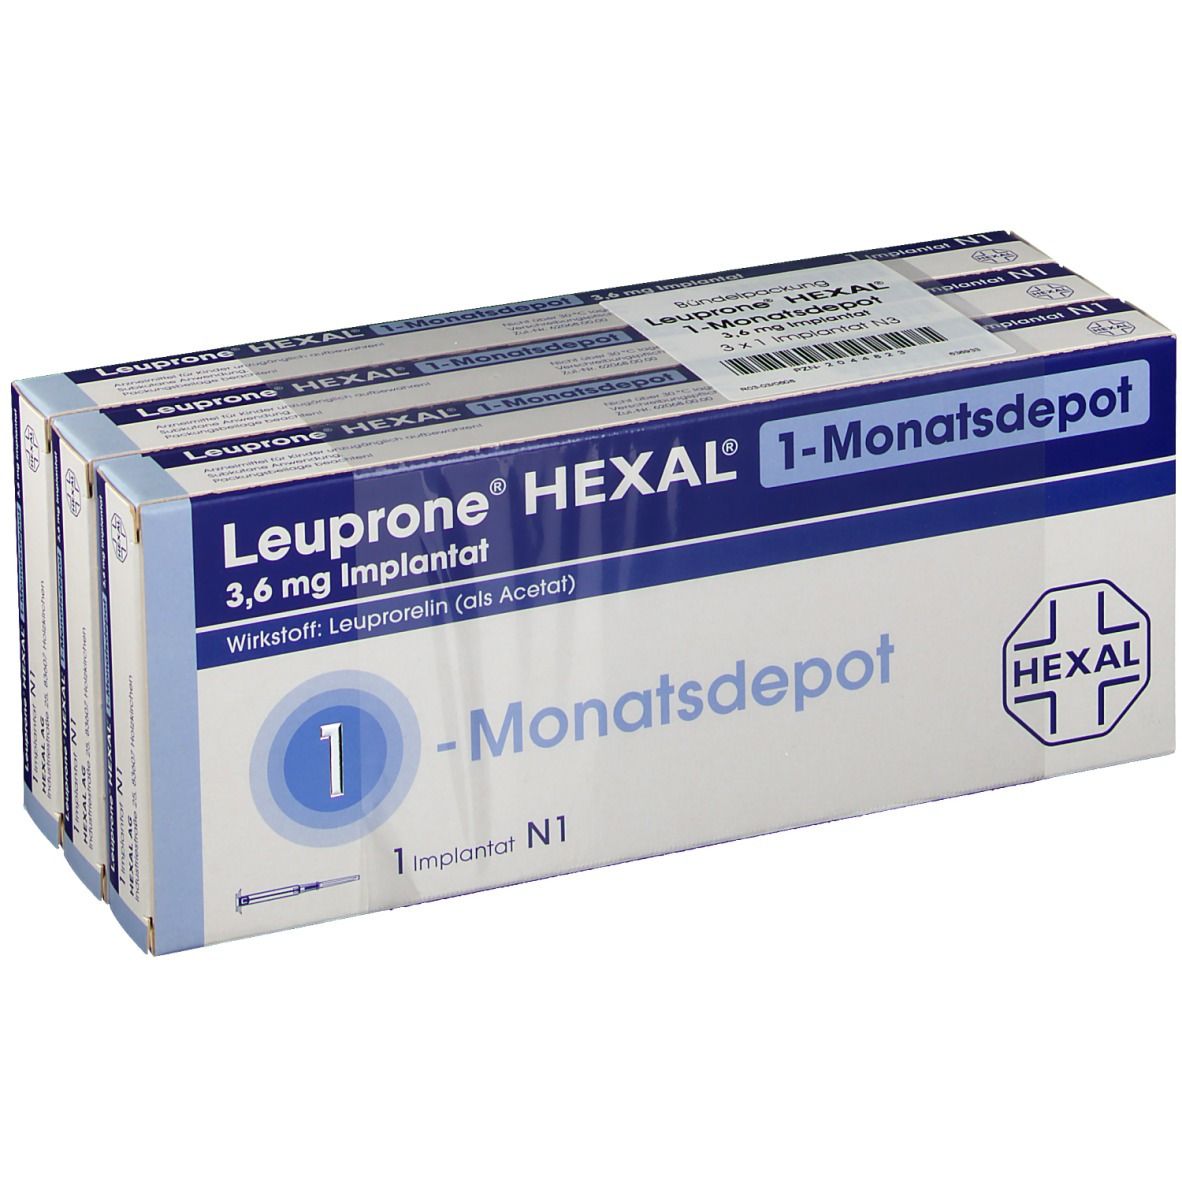 Leuprone® HEXAL® 1-Monatsdepot 3,6 mg Implantat